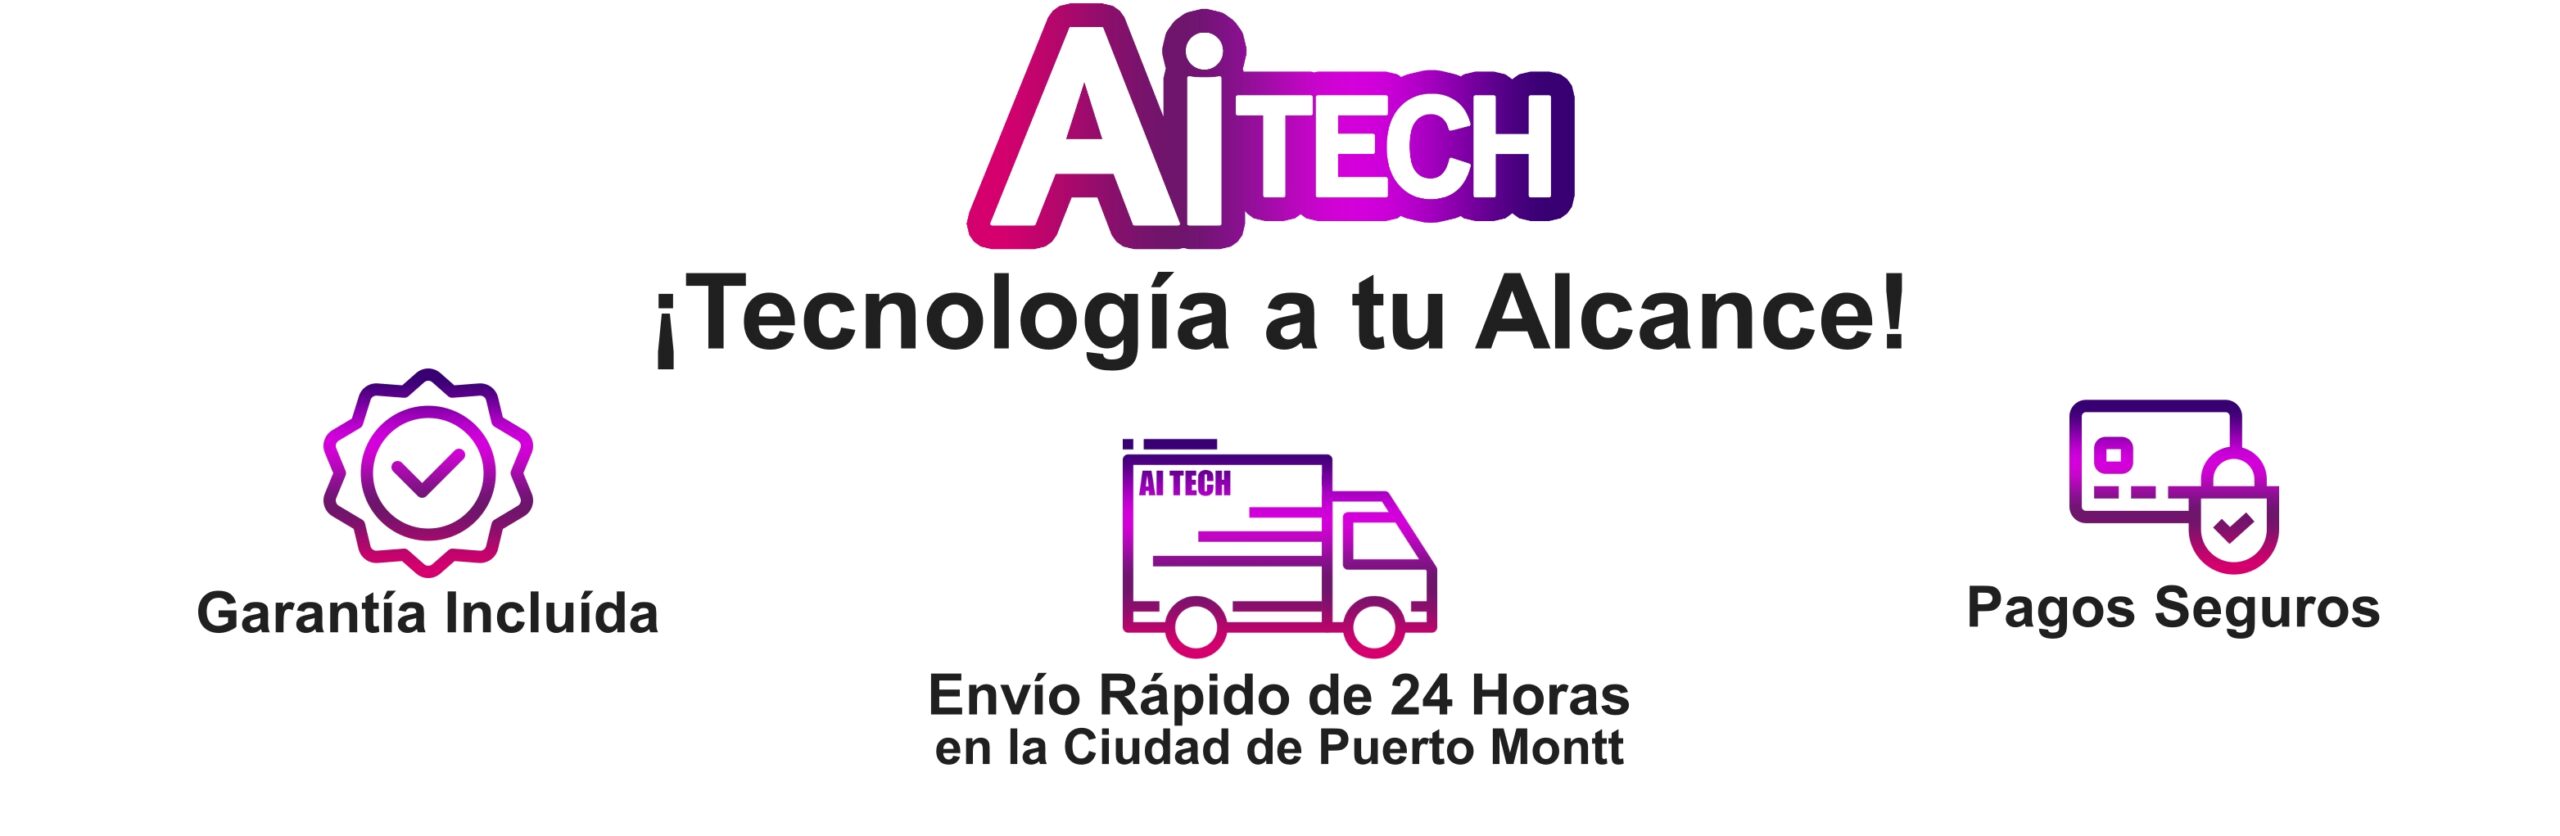 Banner-AiTech-Dashboard